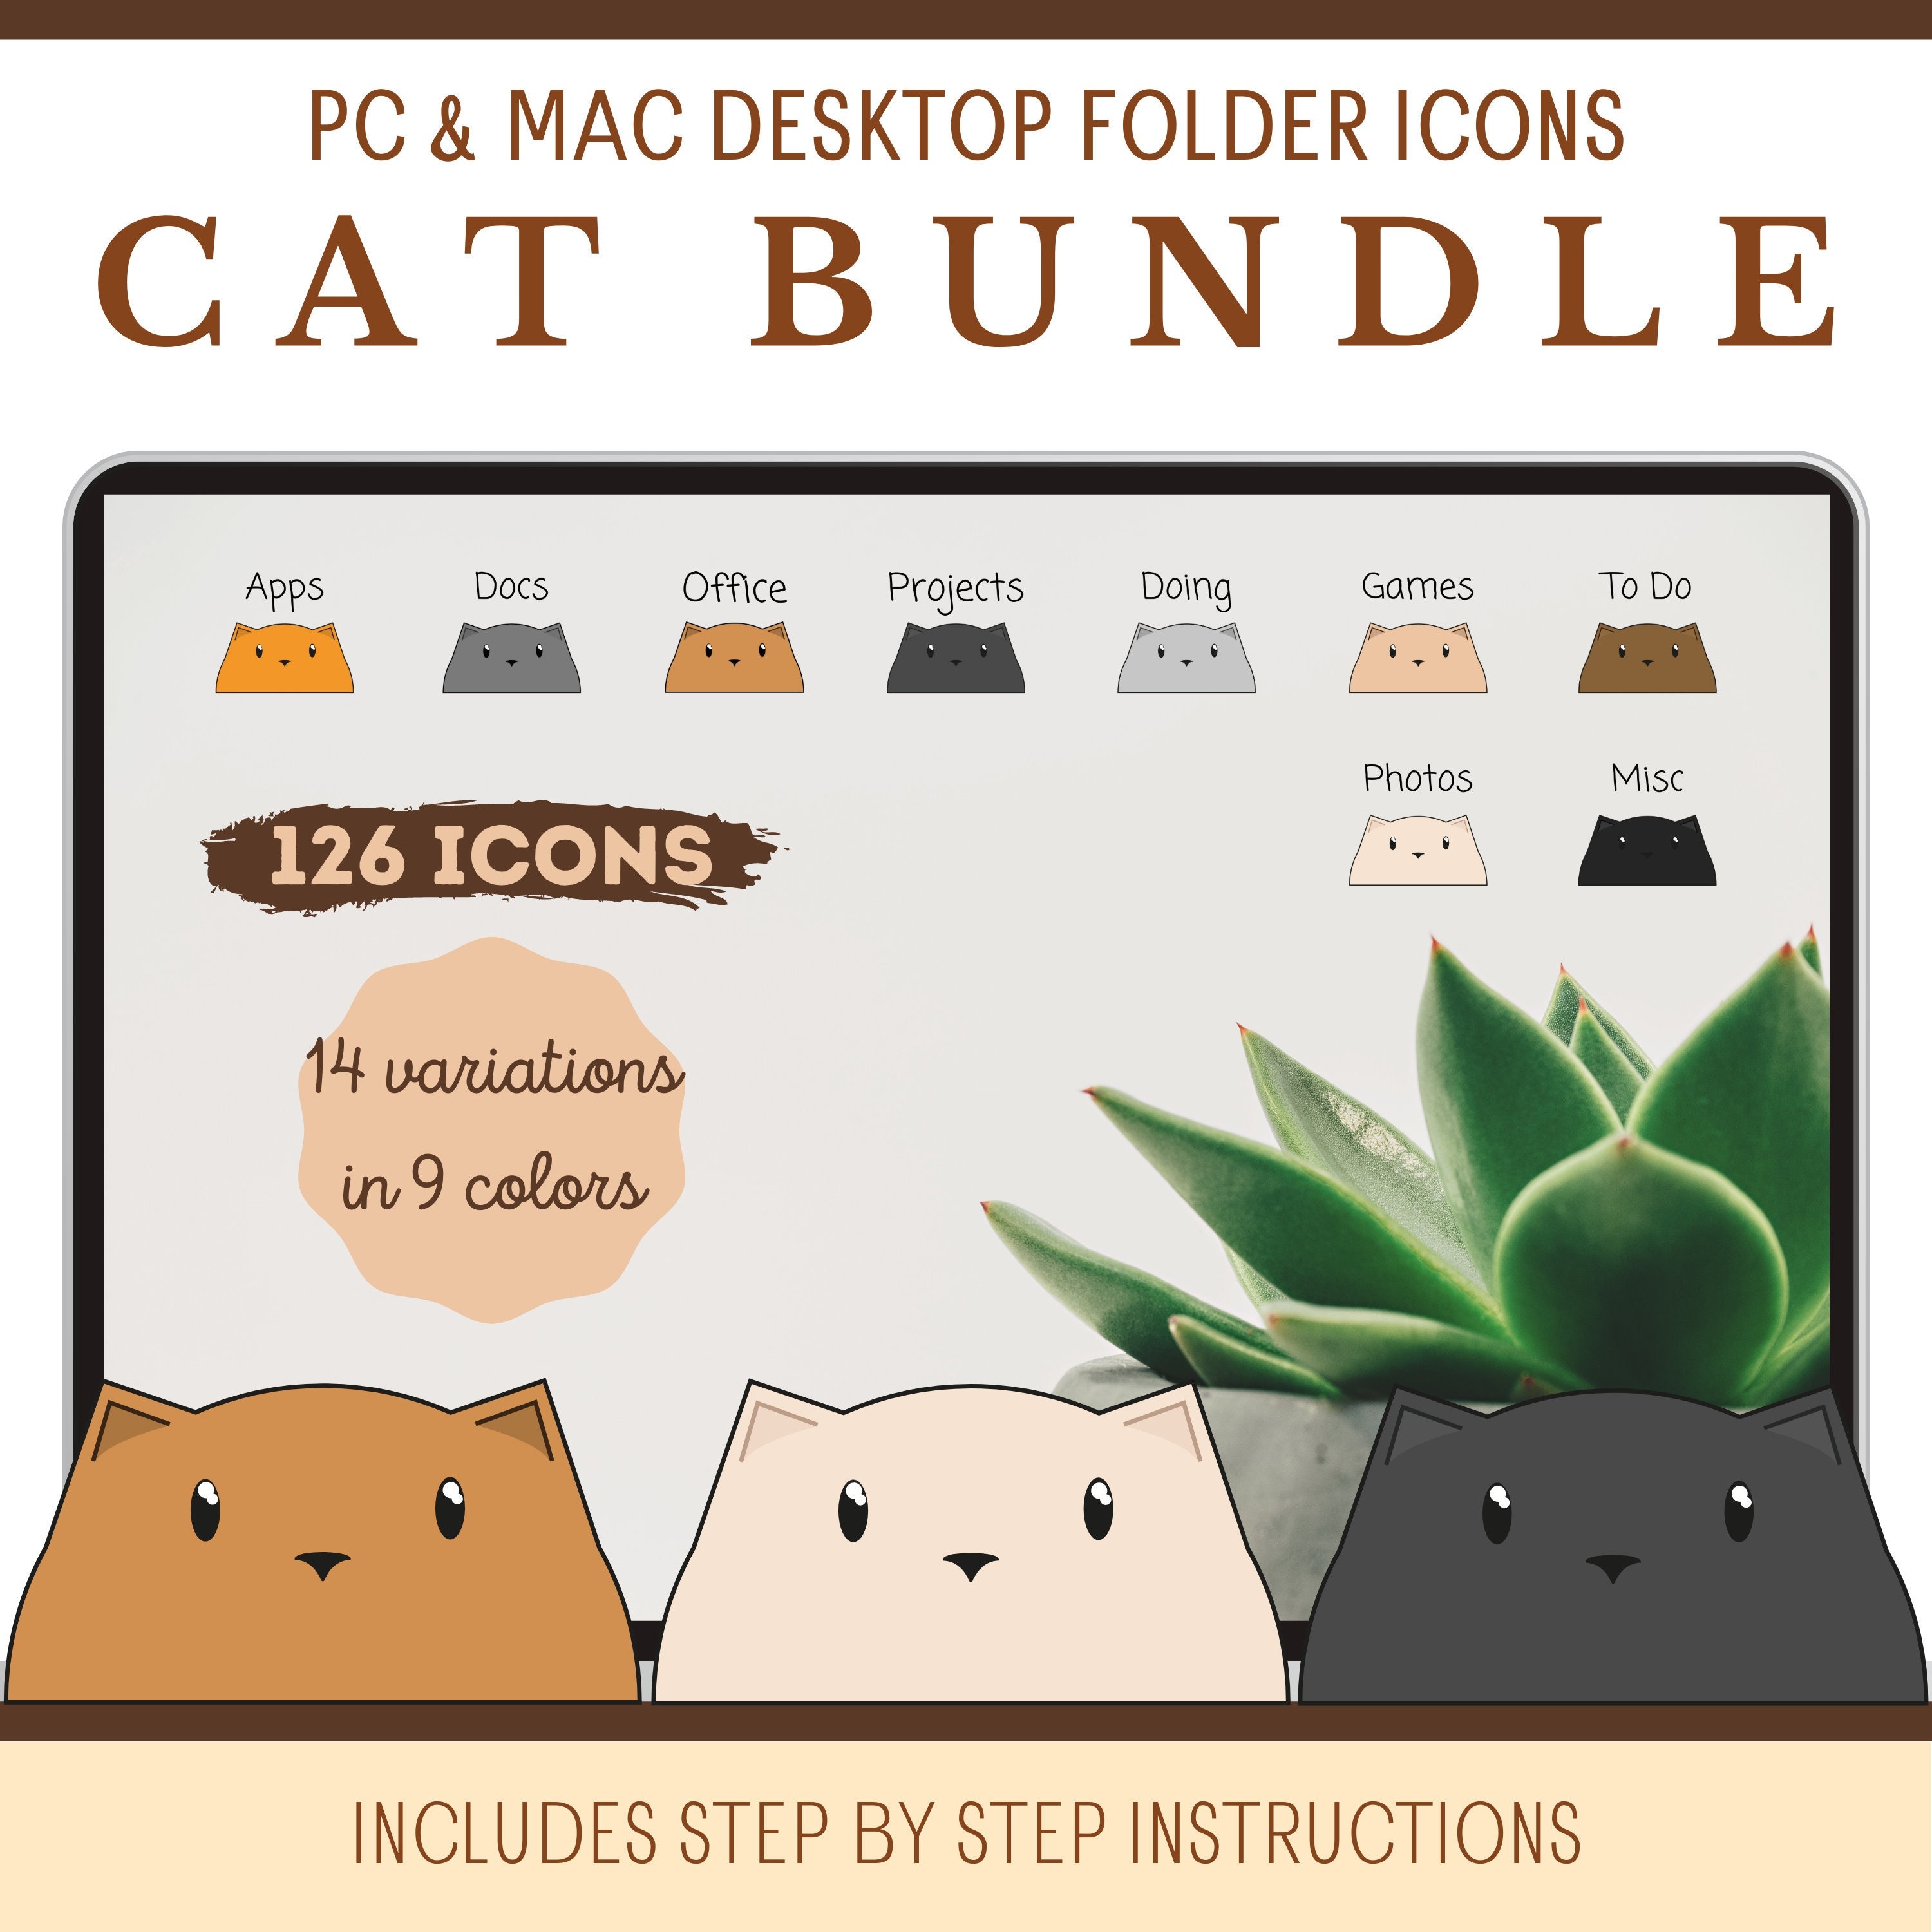 CATS 01 Desktop Folder Icons Mac Windows Folder Icons Mac 